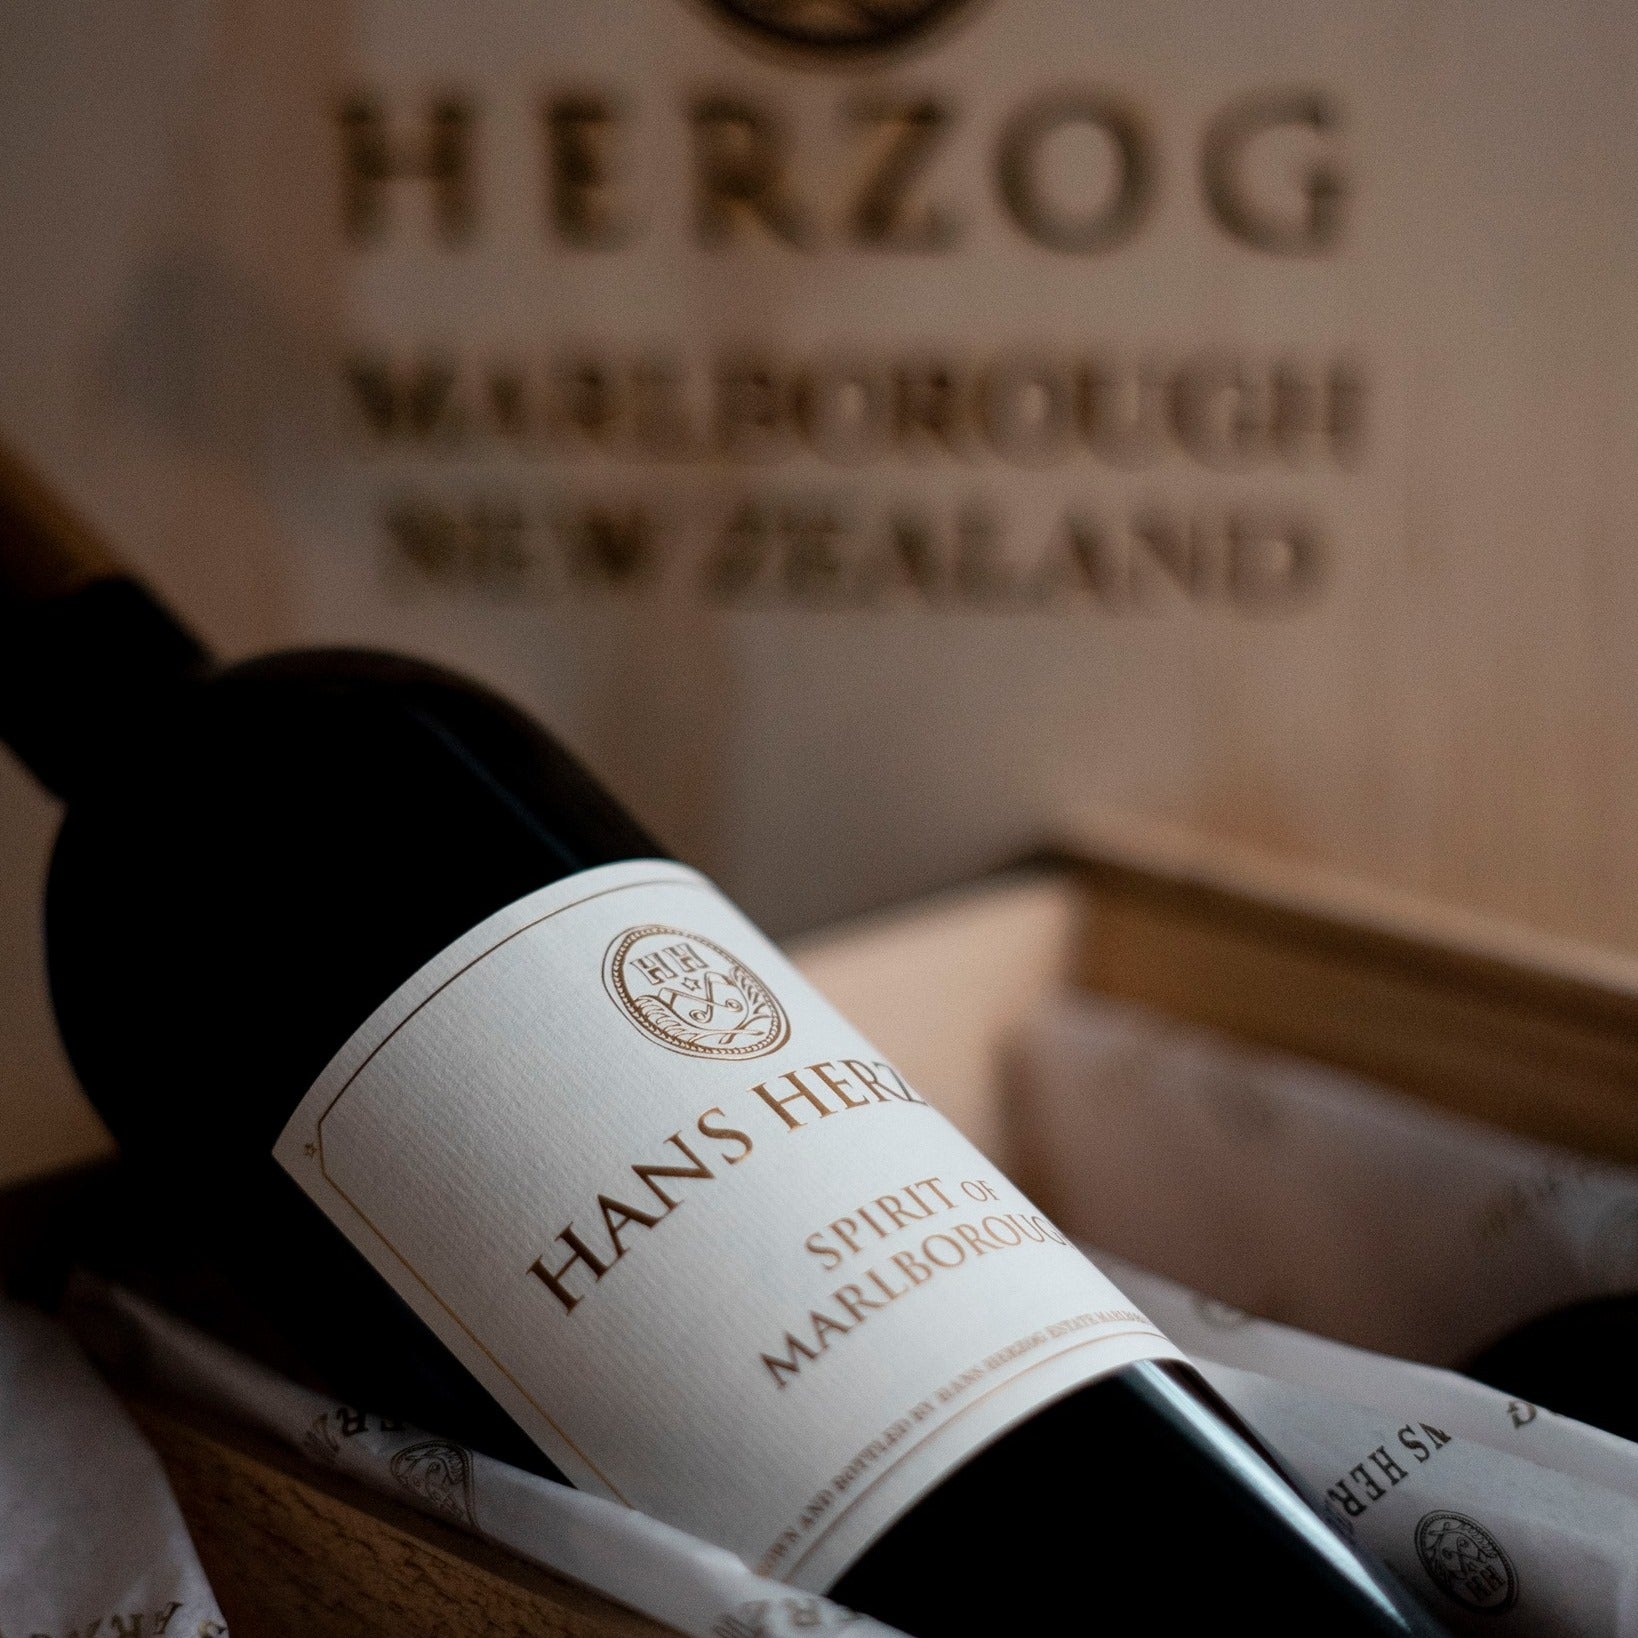 Hans Herzog wine